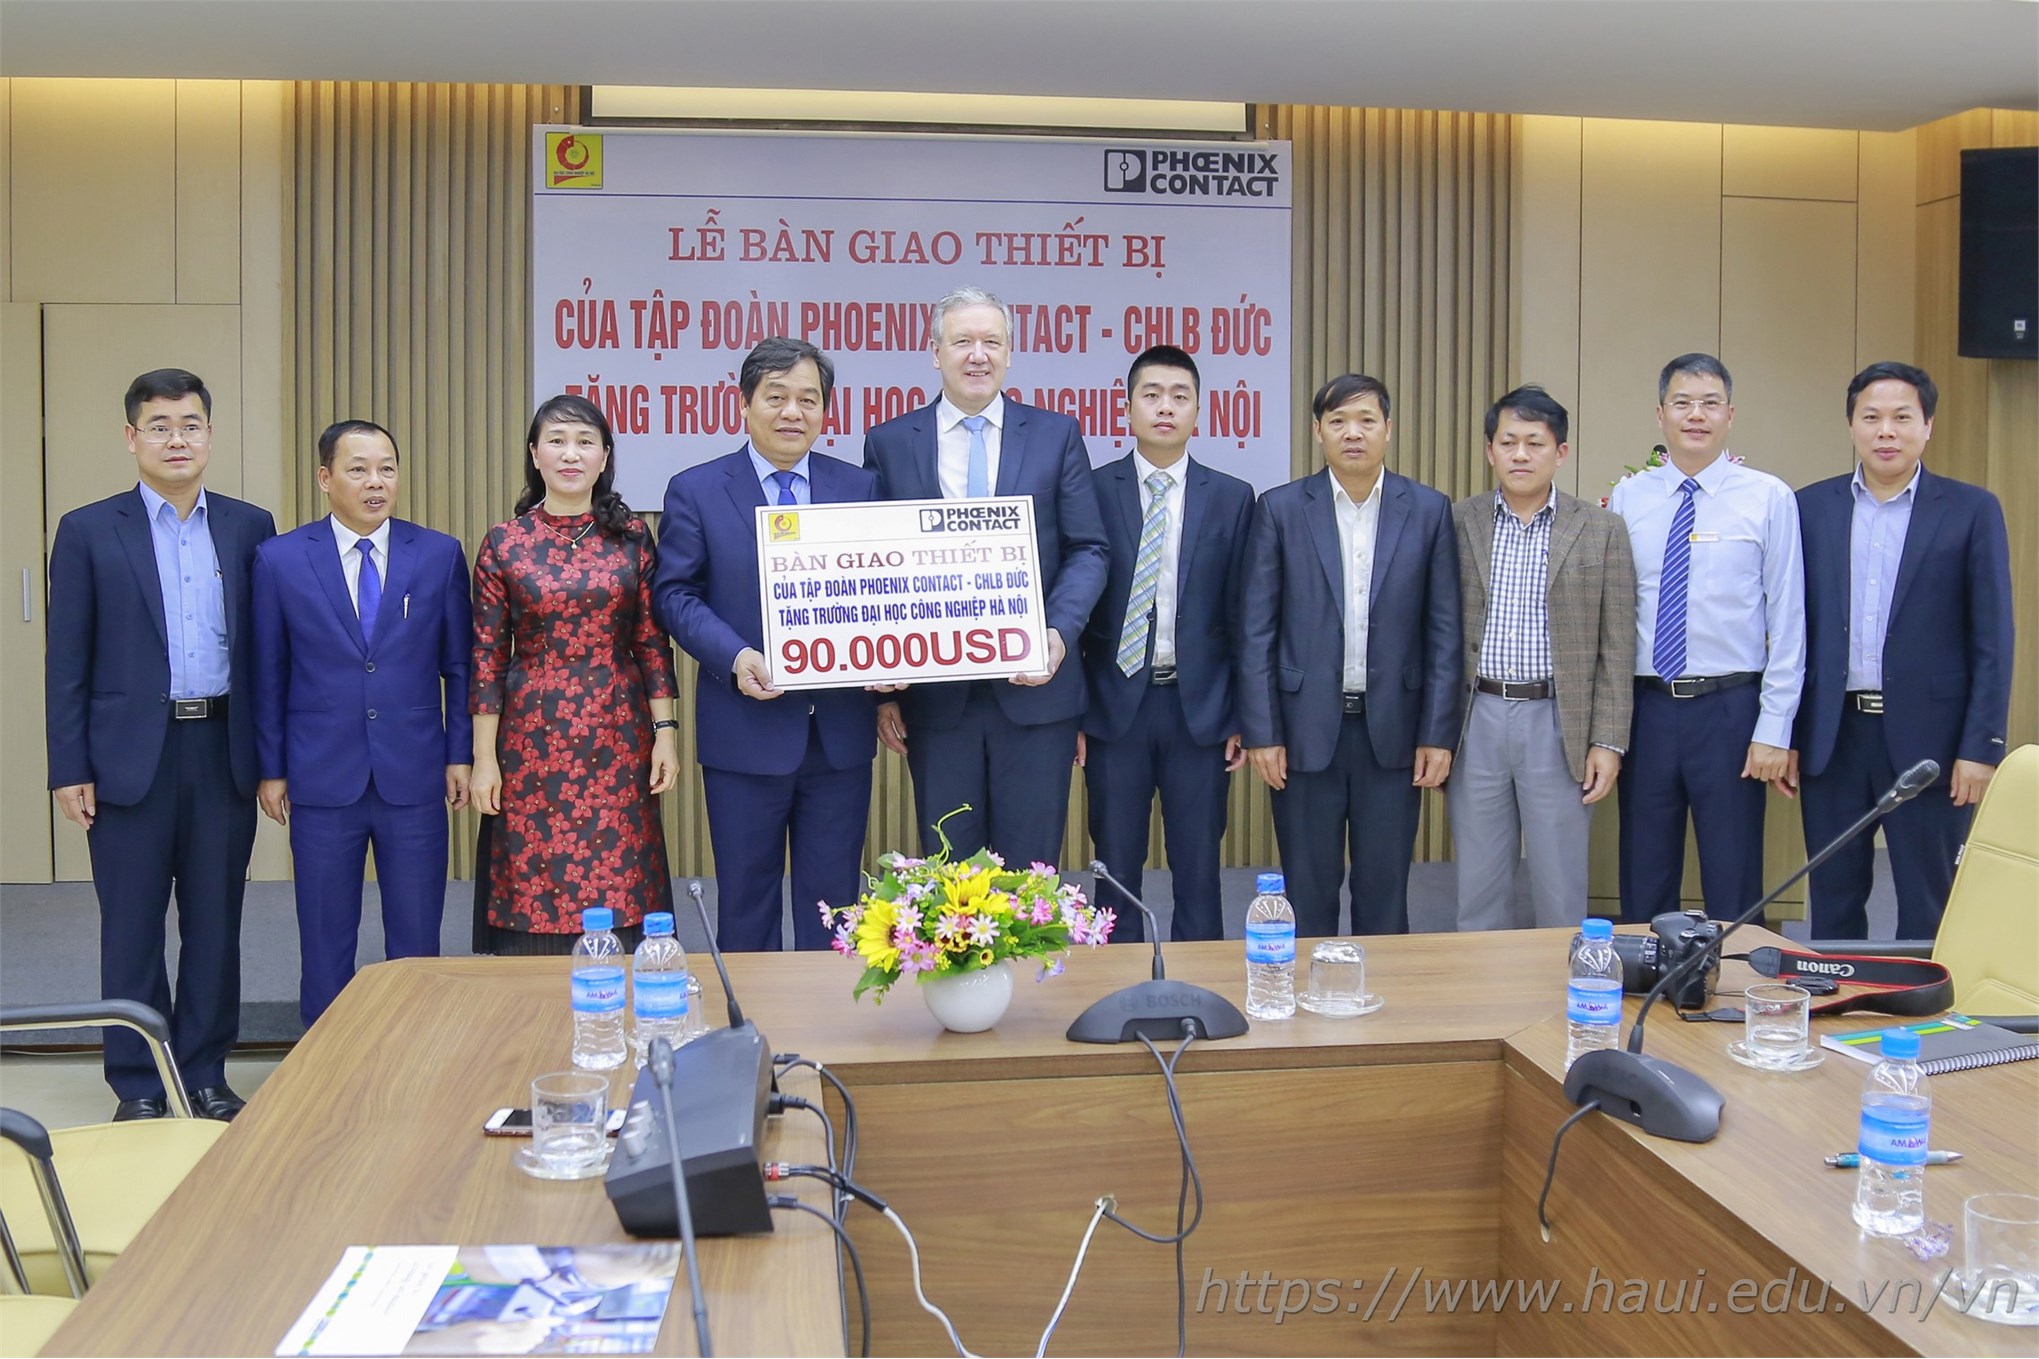 Equipment Handover Ceremony of Phoenix Contact Group - Germany to Hanoi University of Industry